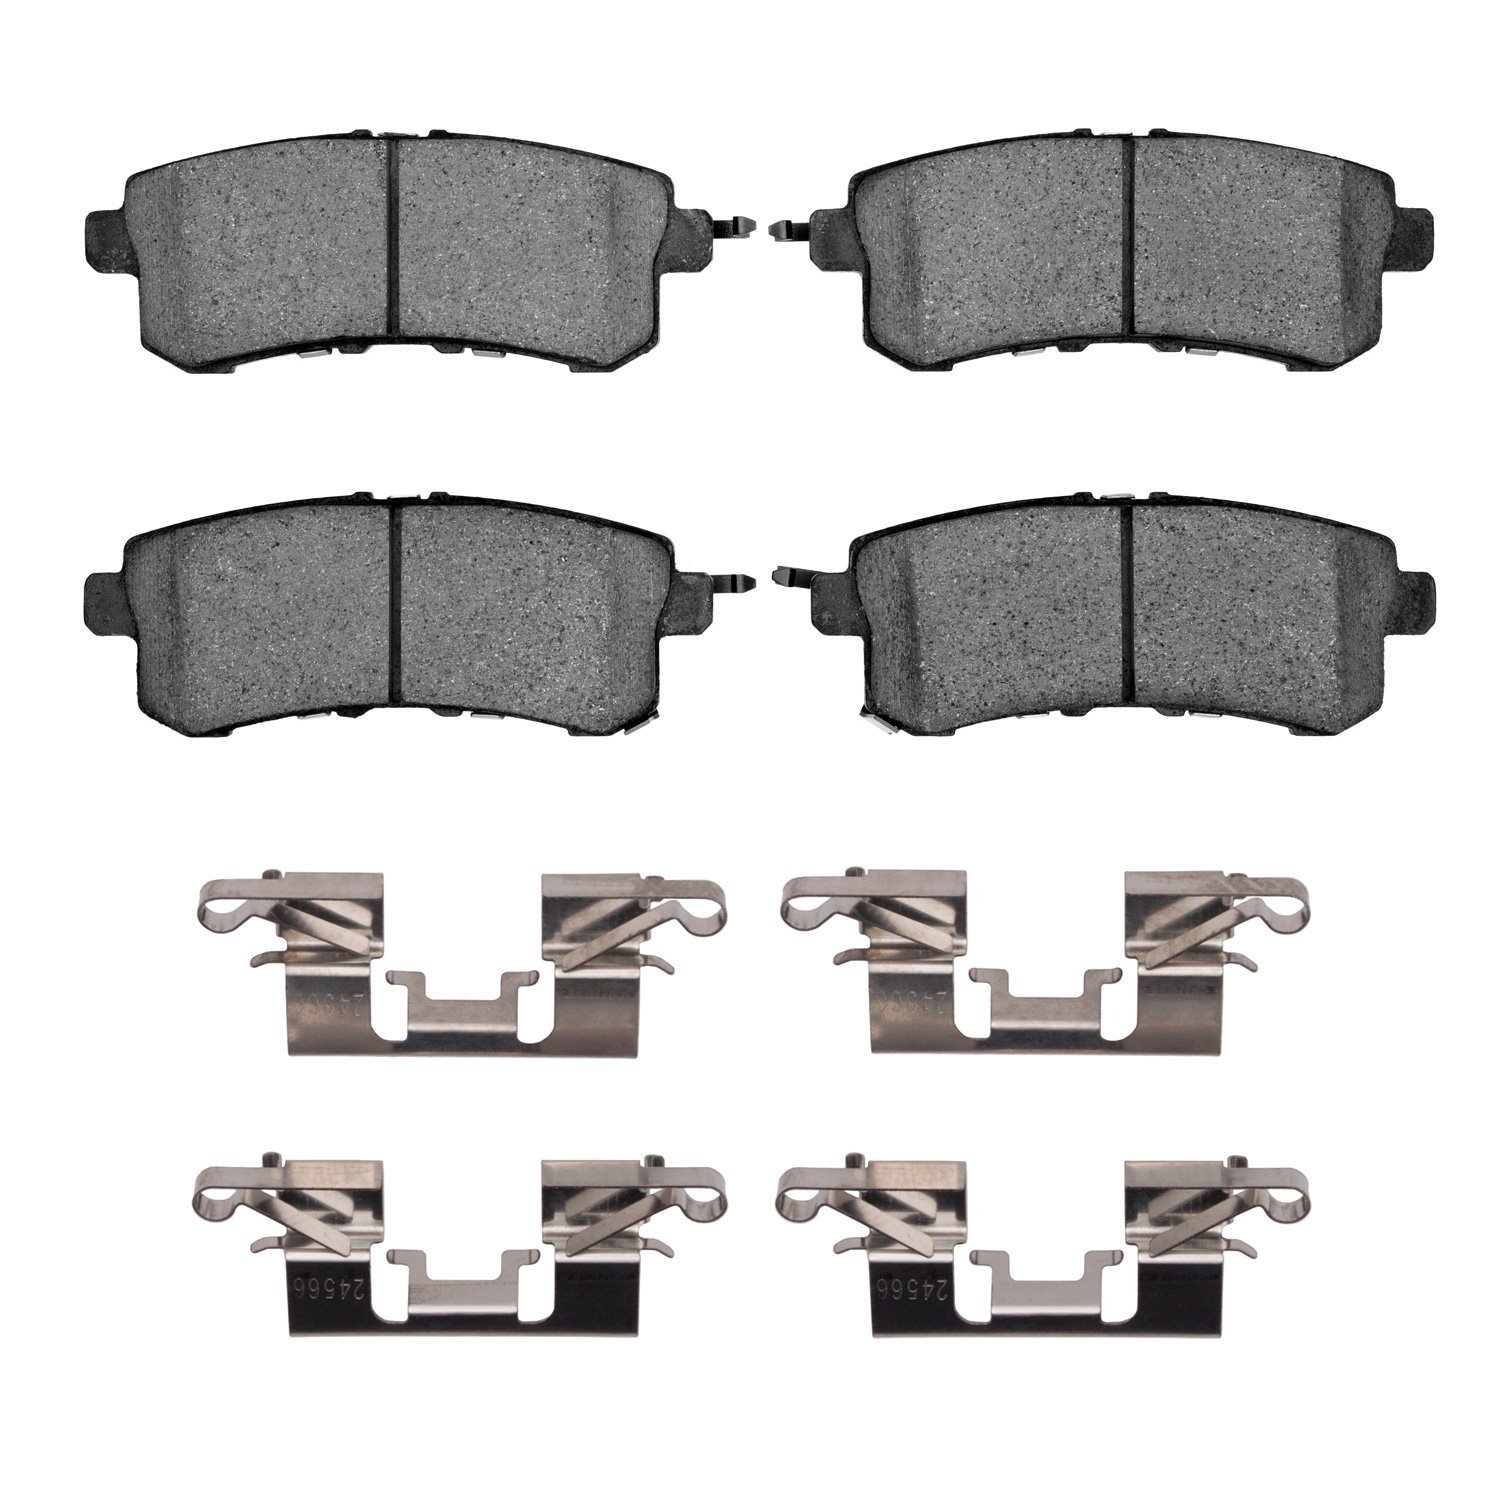 1310-1510-01 3000-Series Ceramic Brake Pads & Hardware Kit, Fits Select Infiniti/Nissan, Position: Rear